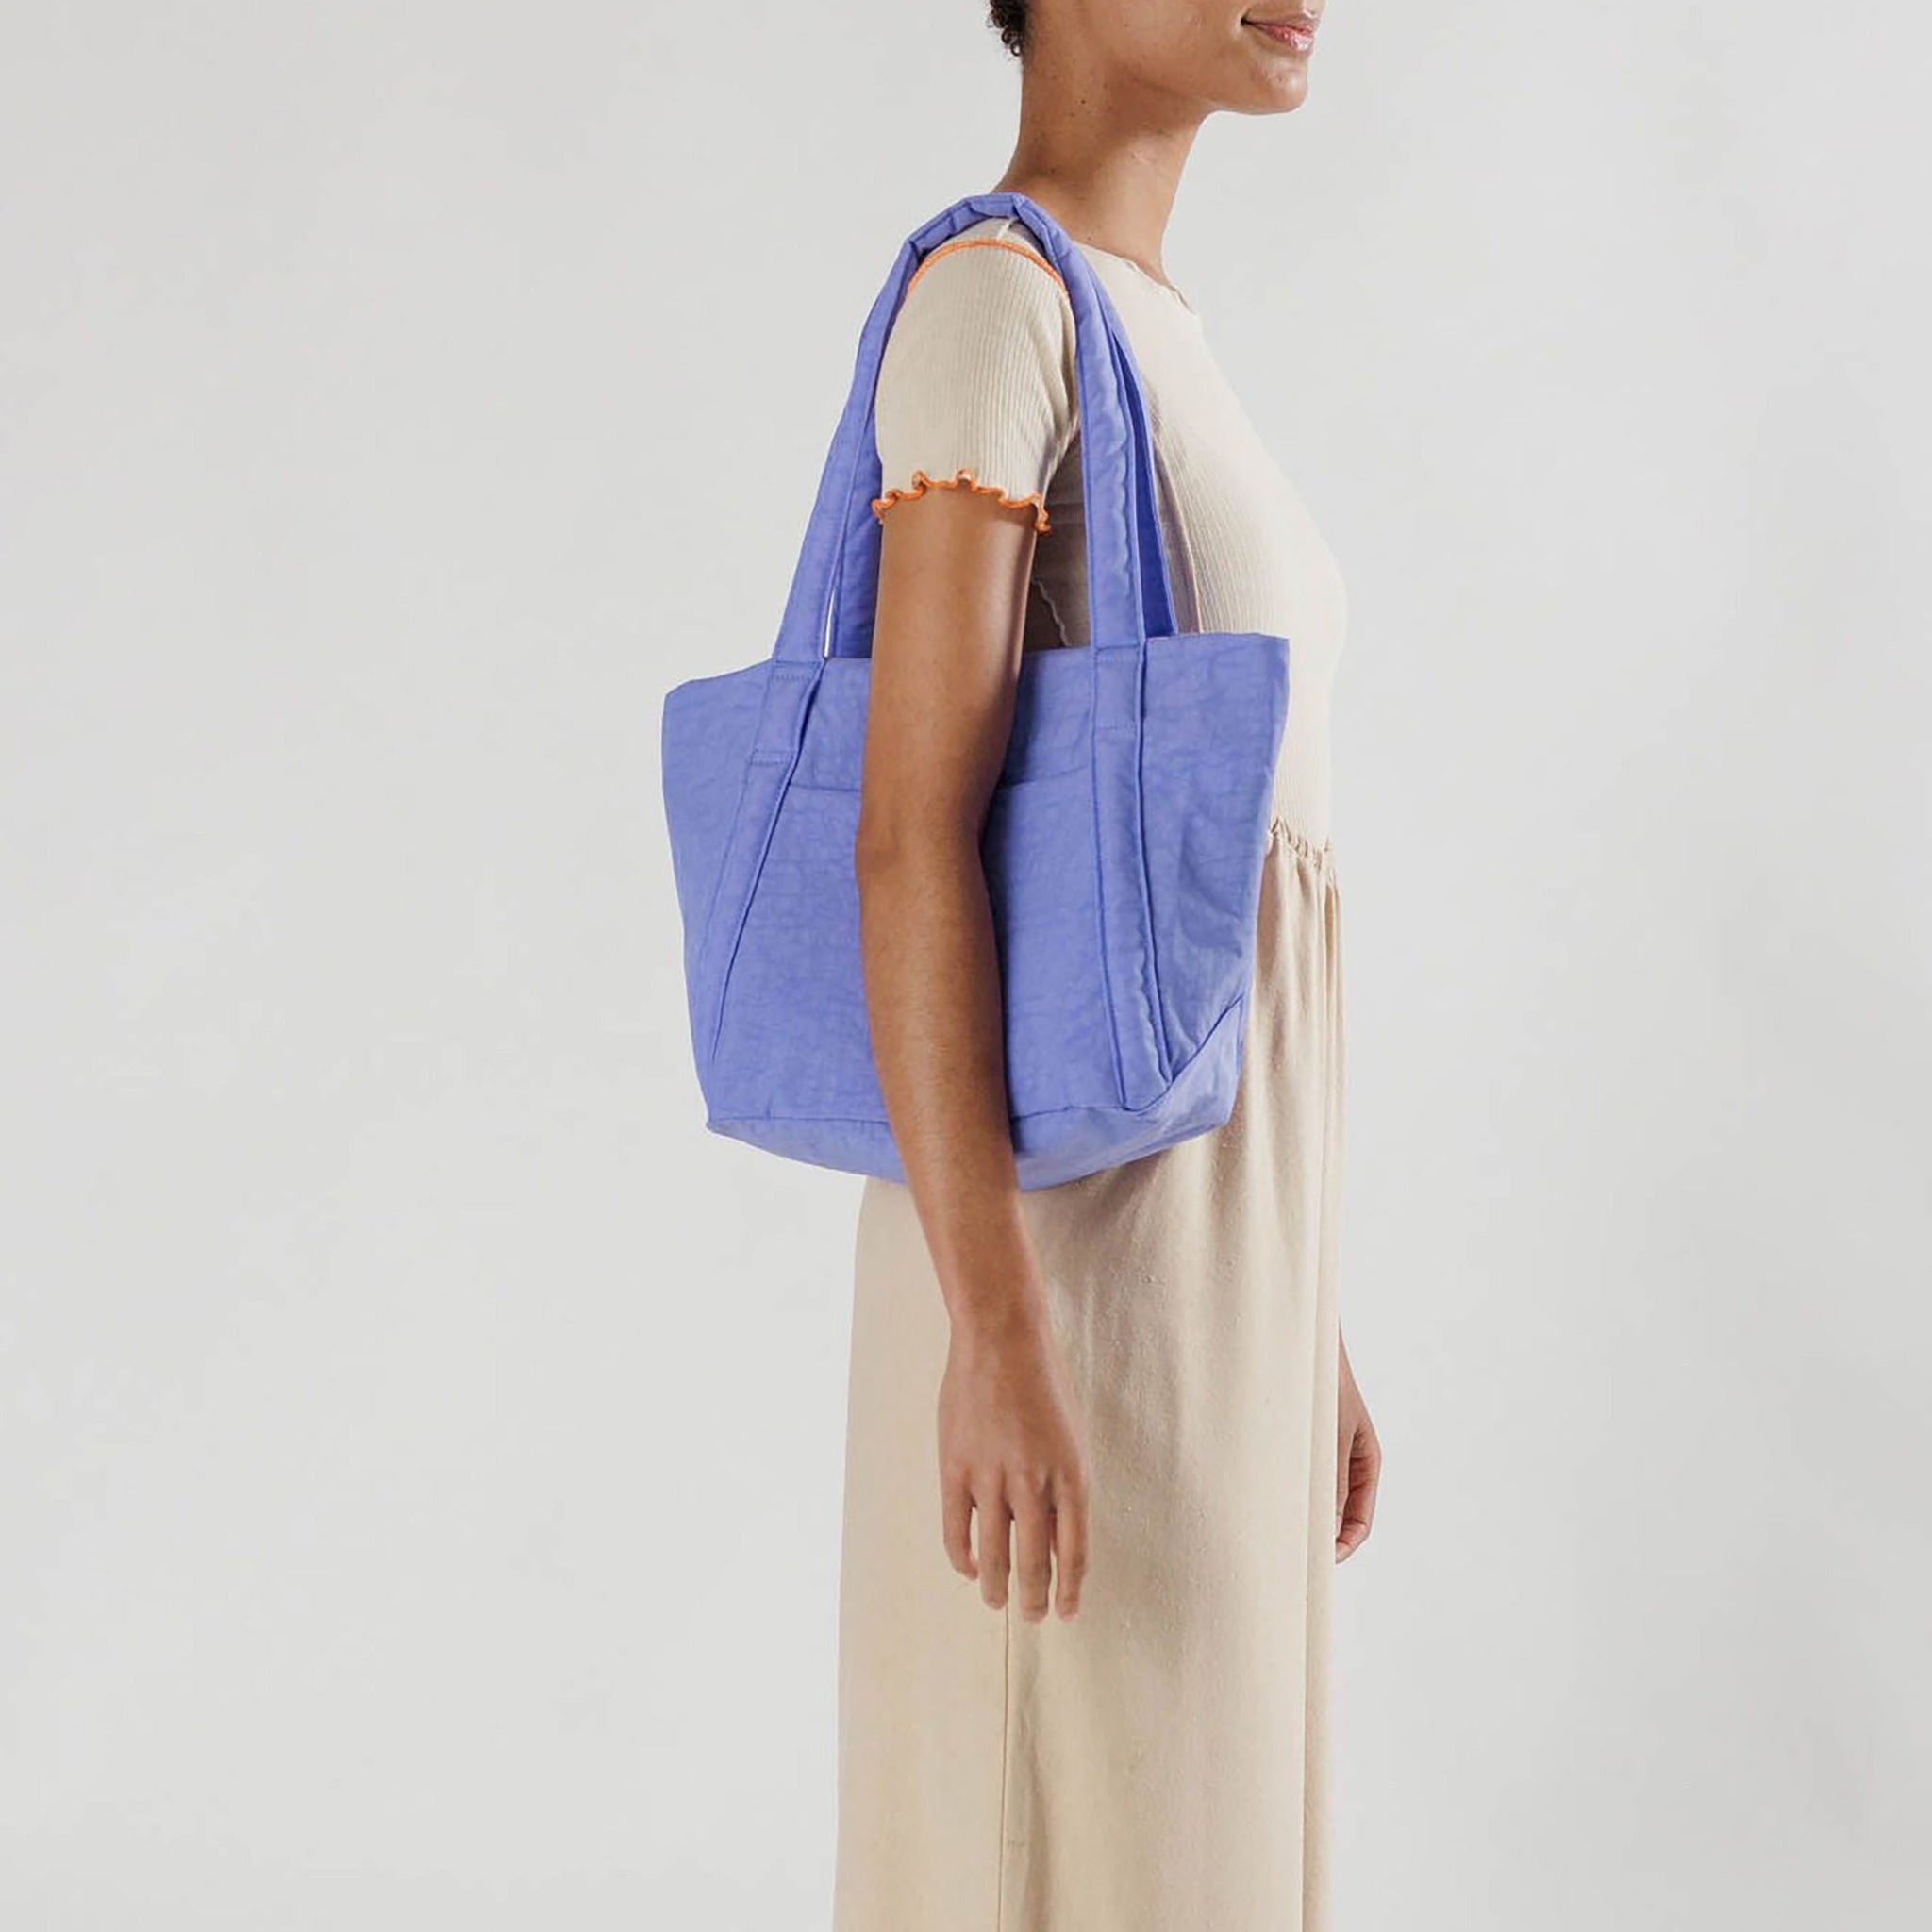 Baggu - Mini Nylon Shoulder Bag - Extra Pink